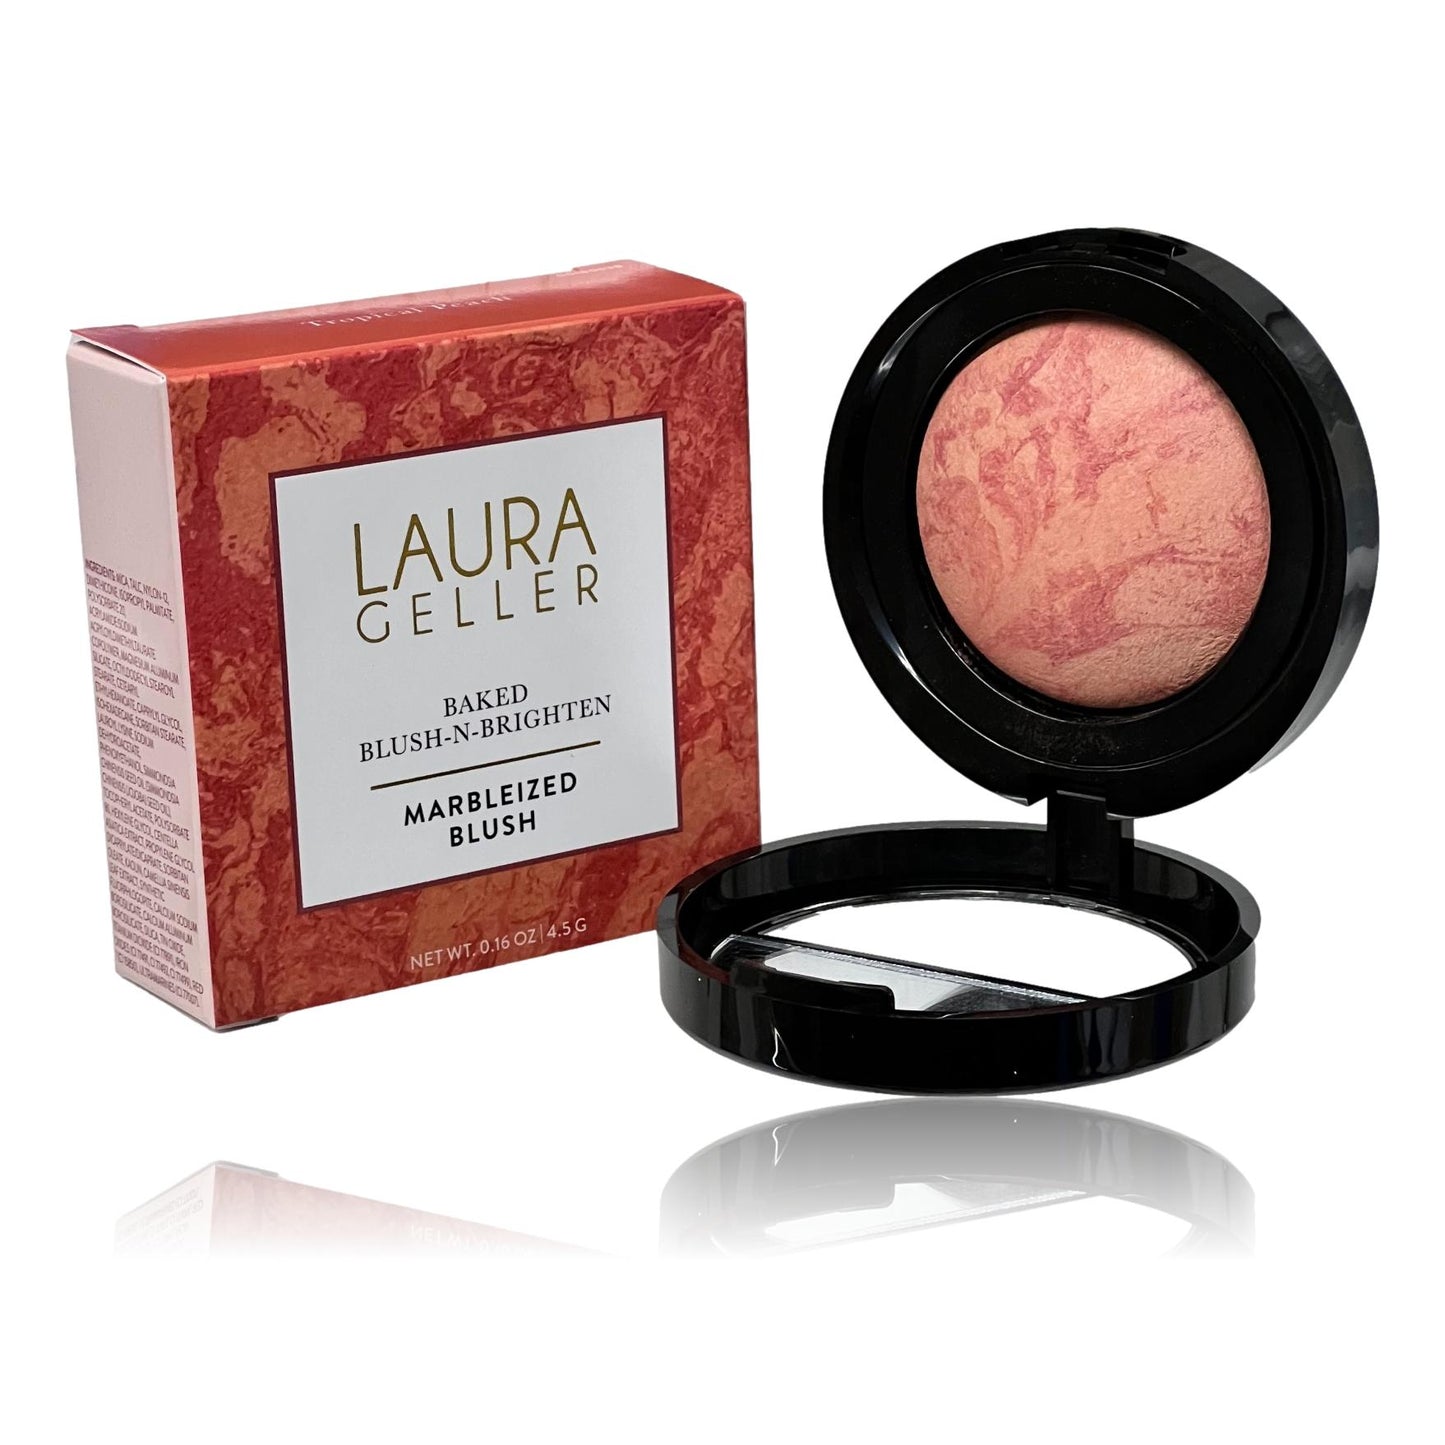 Laura Geller Baked Blush-N-Brighten Marbelised Blush in Tropical Peach 4.5g